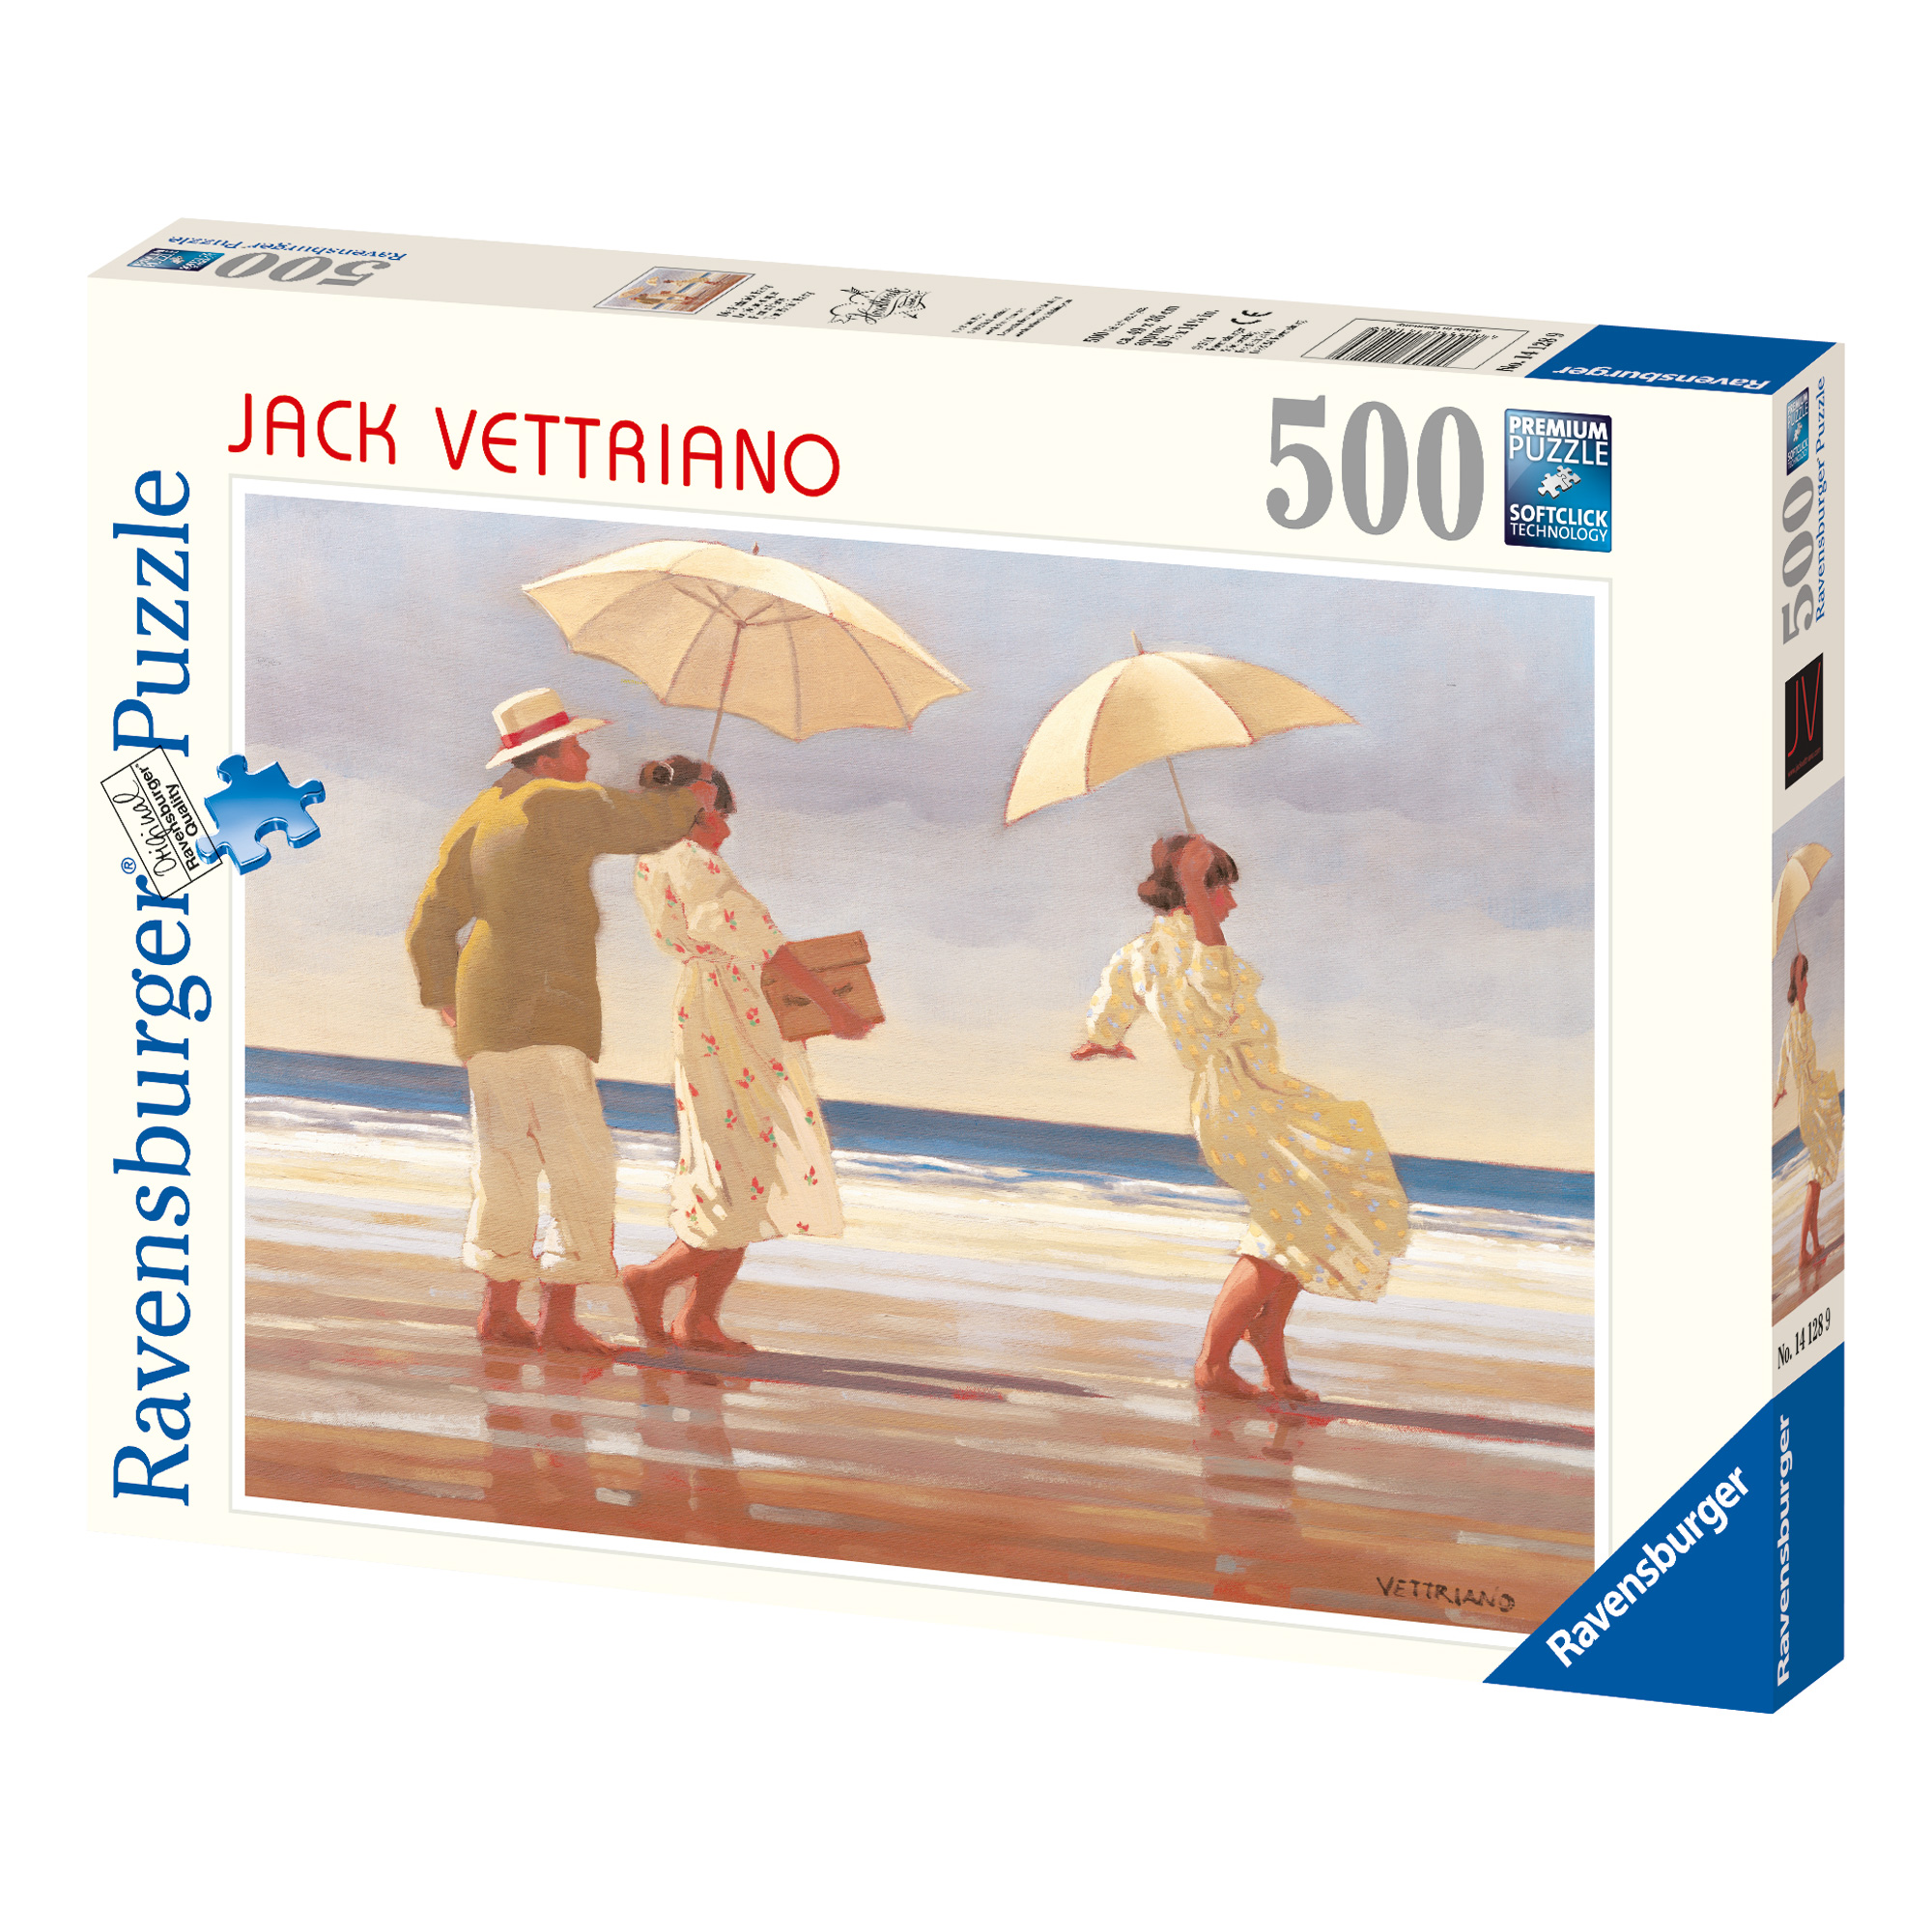 Ravensburger Jack Vettriano, The Picnic Party 500 Piece